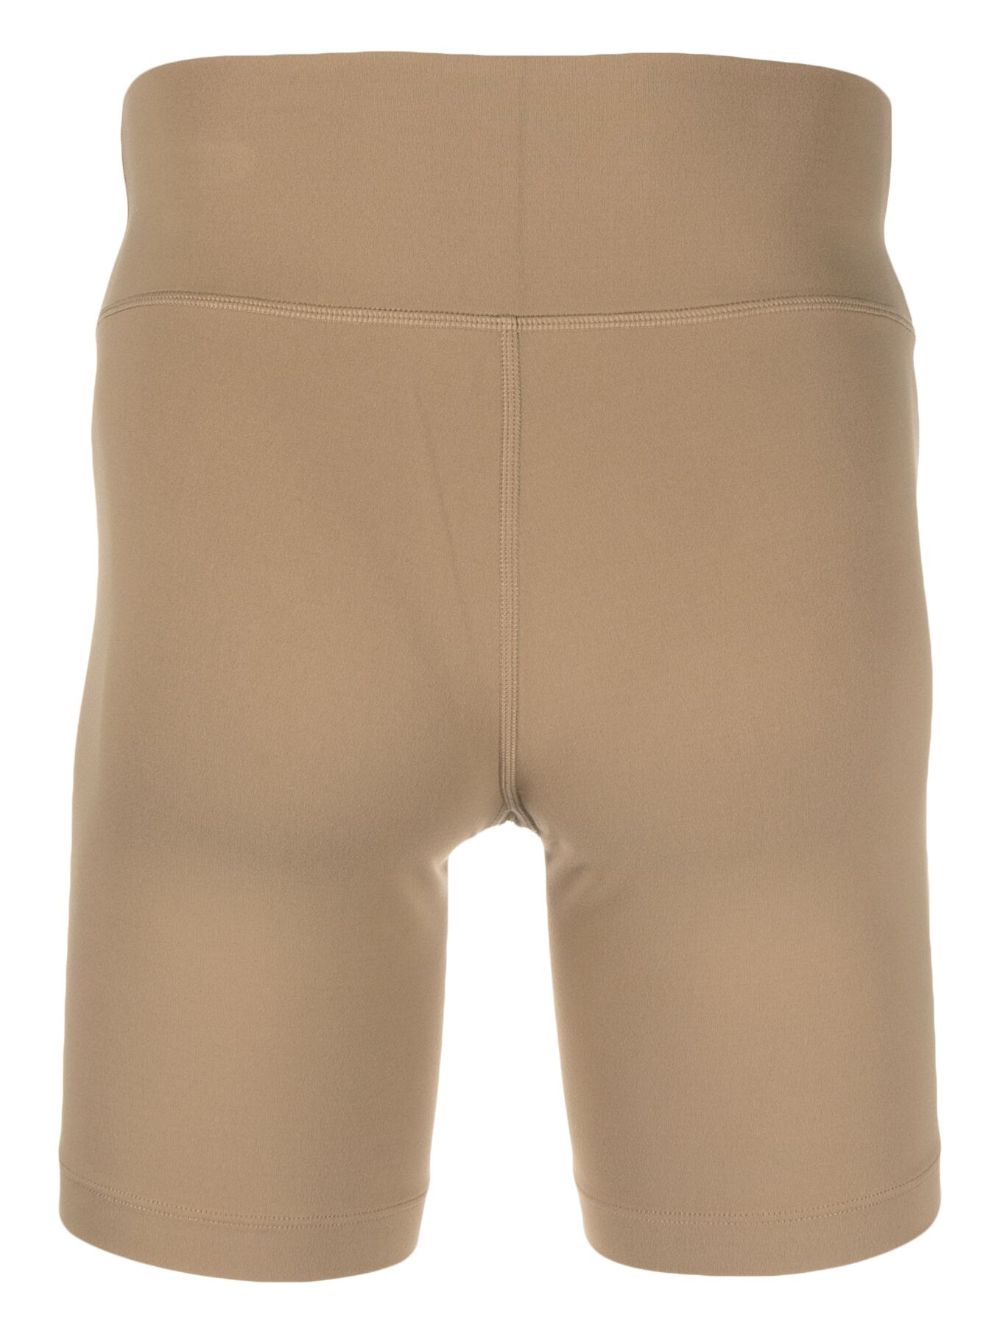 Shorts a vita alta con stampa logo in marrone - uomo SPORTY & RICH | SH866ES